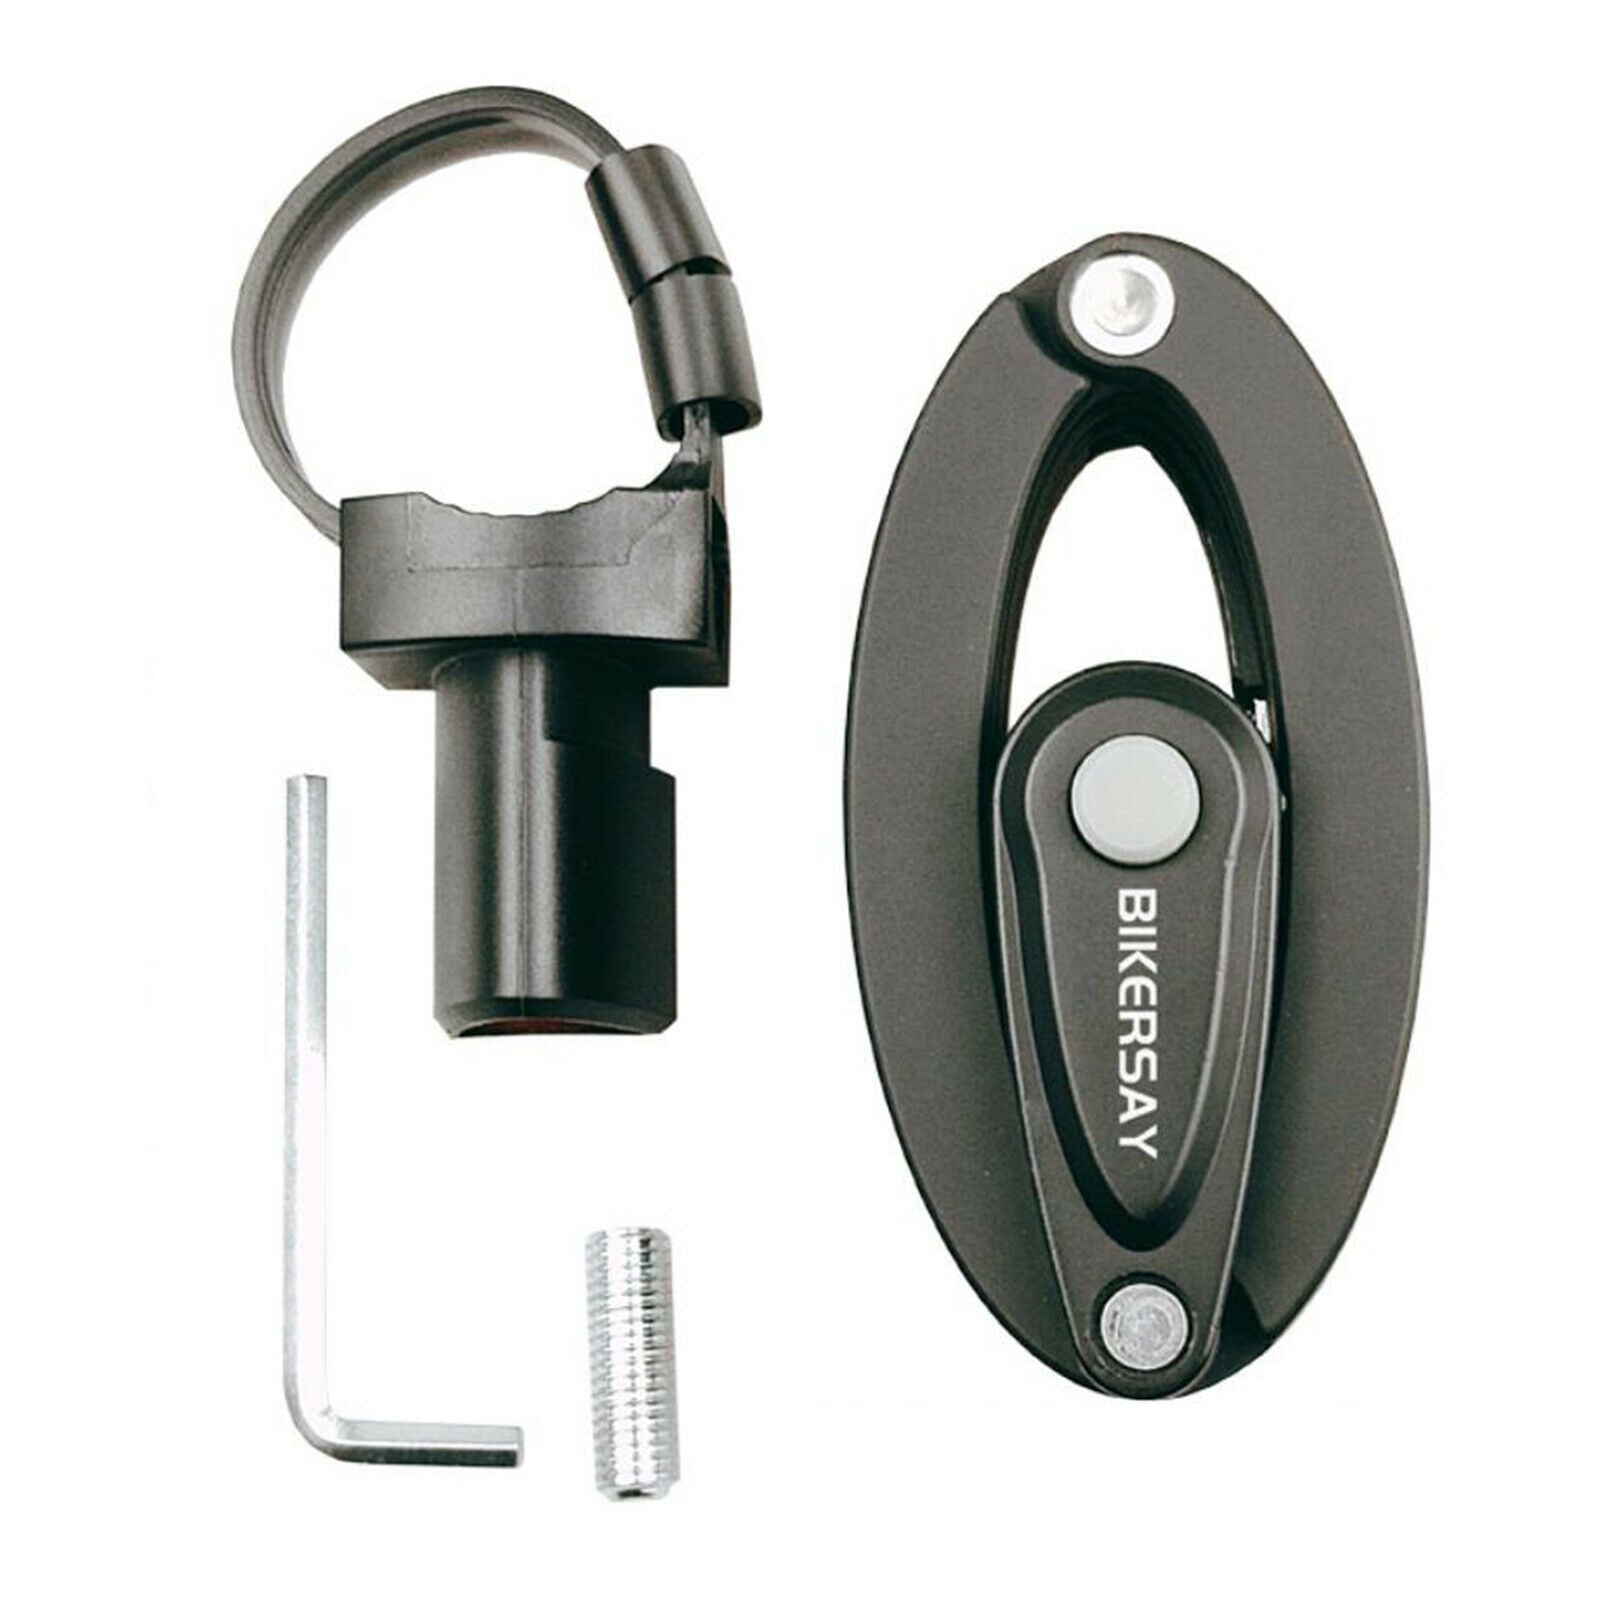 Portable Bike Foldable Lock Password Locks Heavy Duty Anti-cut Chain Locks